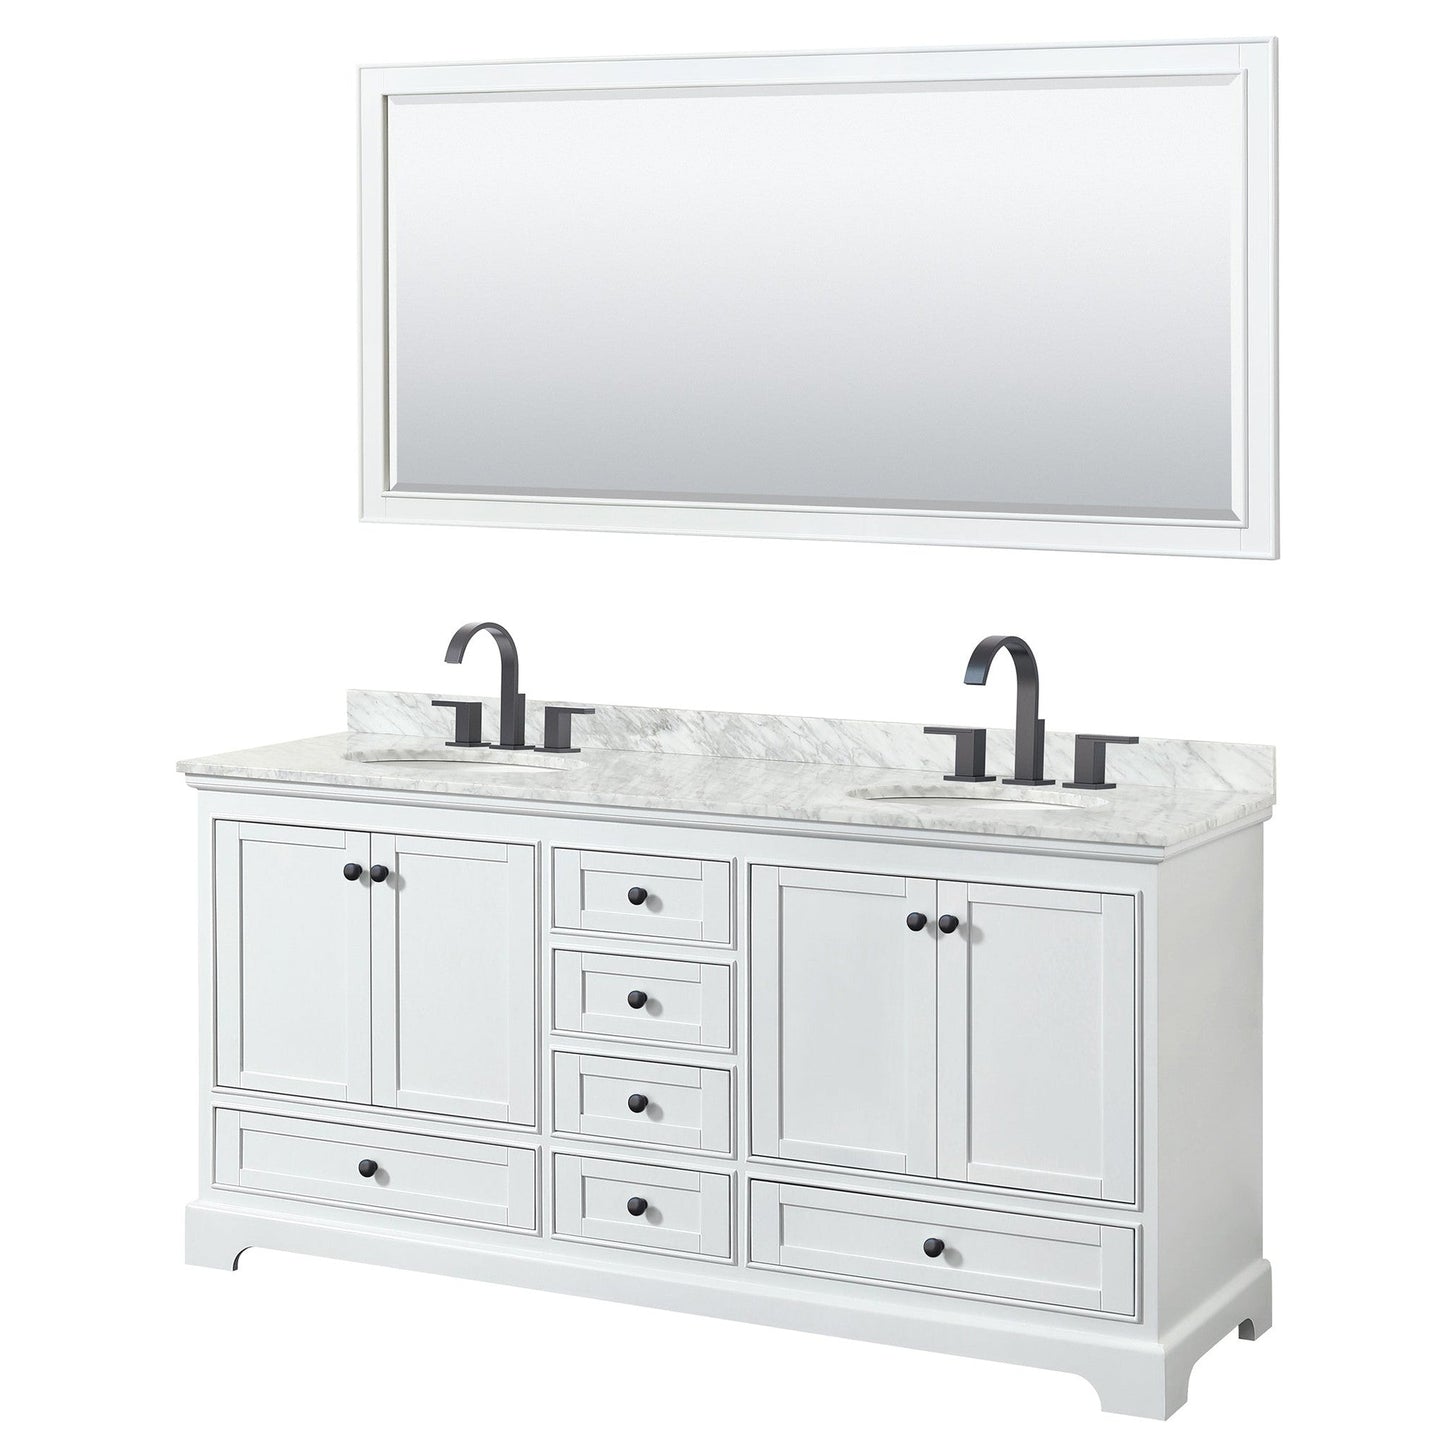 Deborah 72" Double Bathroom Vanity in White, White Carrara Marble Countertop, Undermount Oval Sinks, Matte Black Trim, 70" Mirror